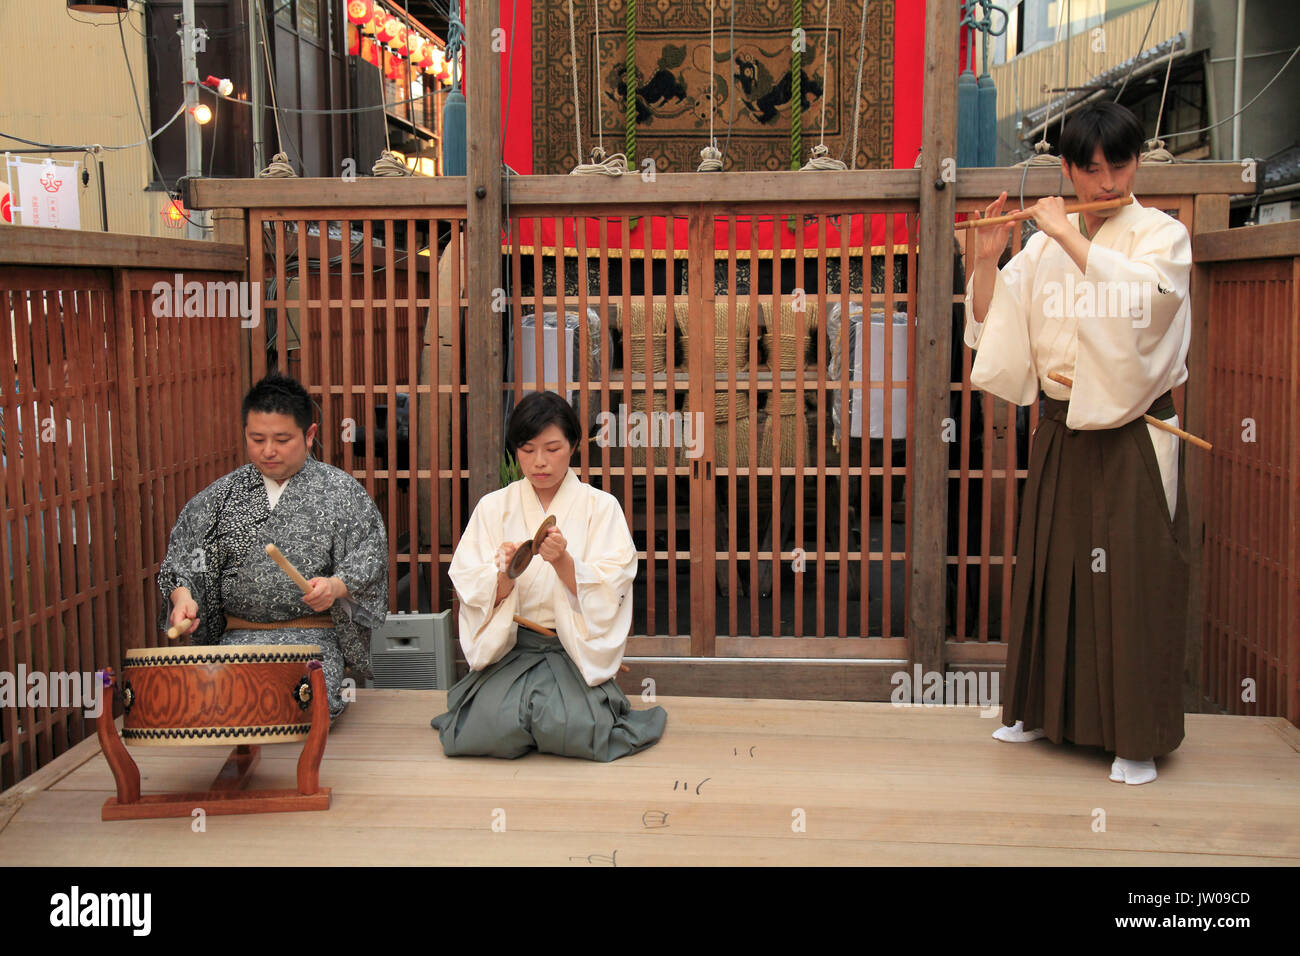 Japan, Kyoto, Gion Matsuri, festival, musicians, street performance, Stock Photo